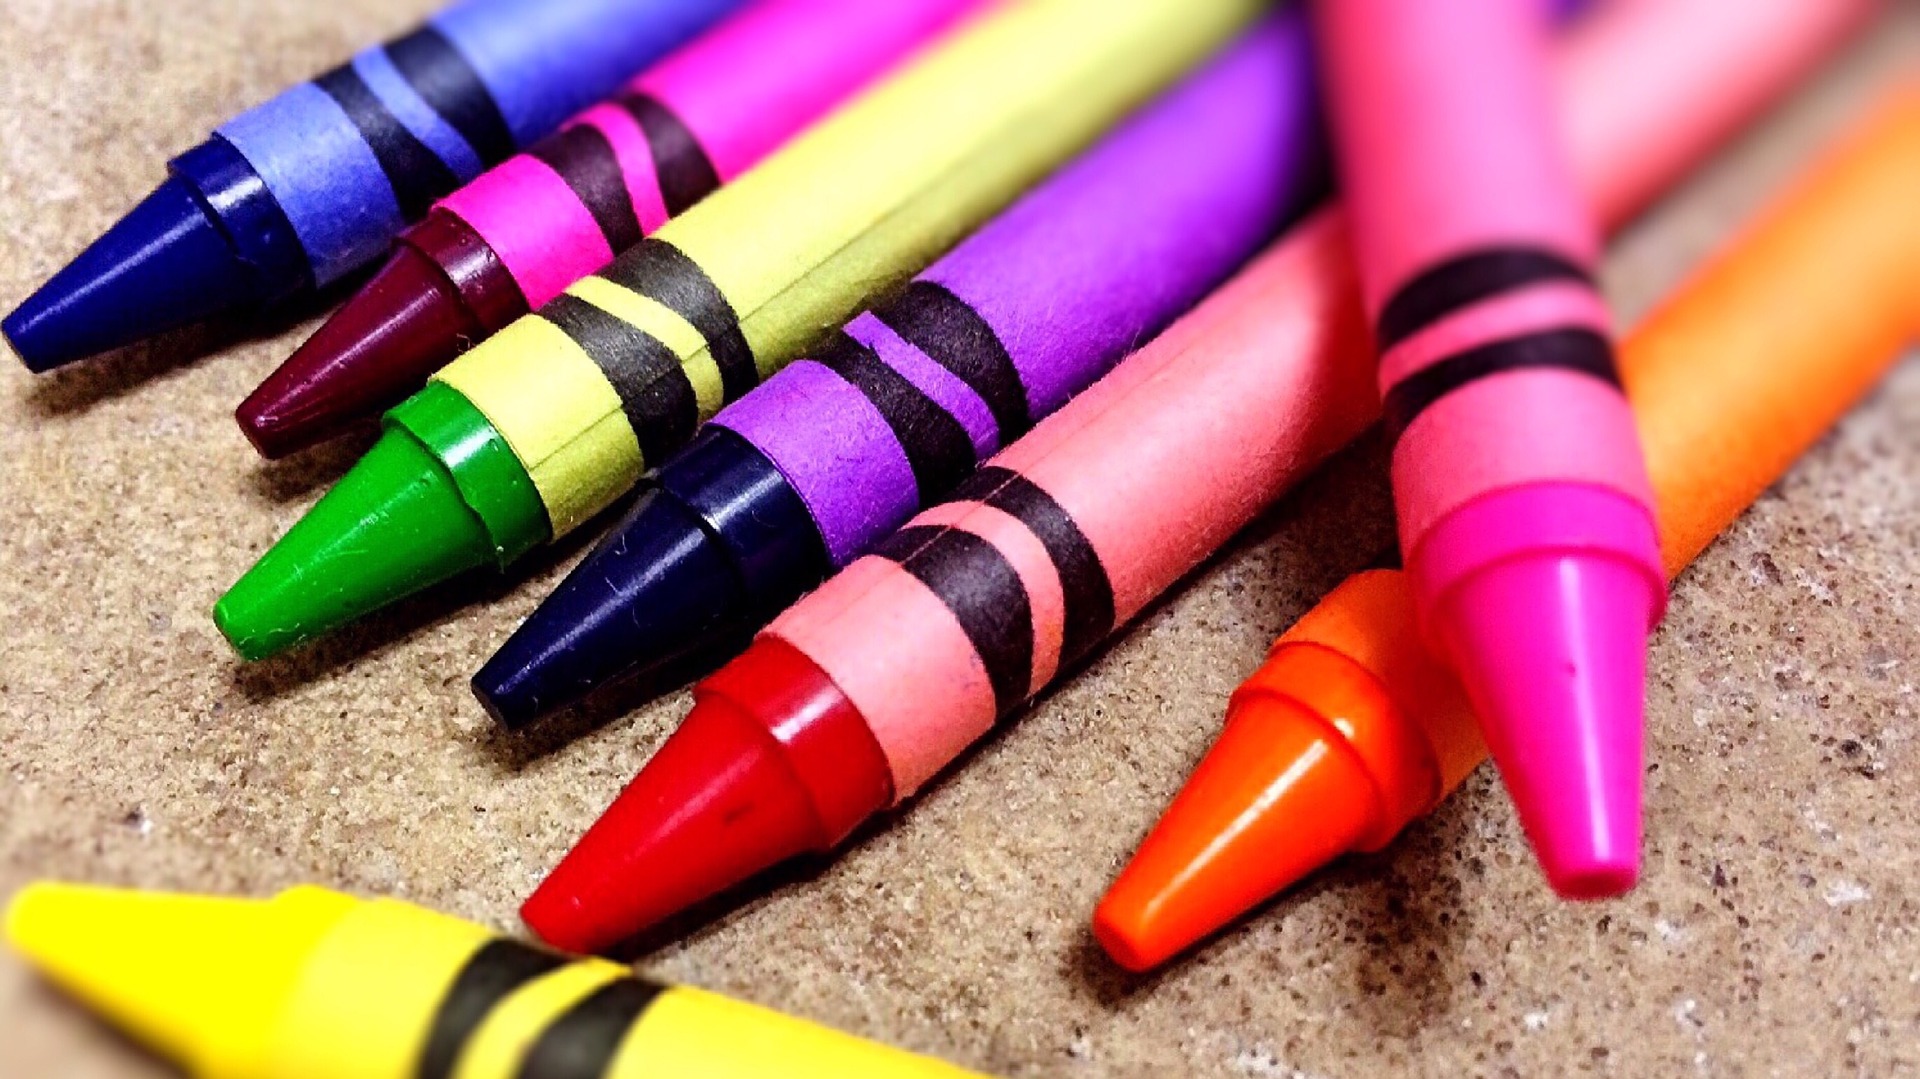 crayons-879974_1920.jpg